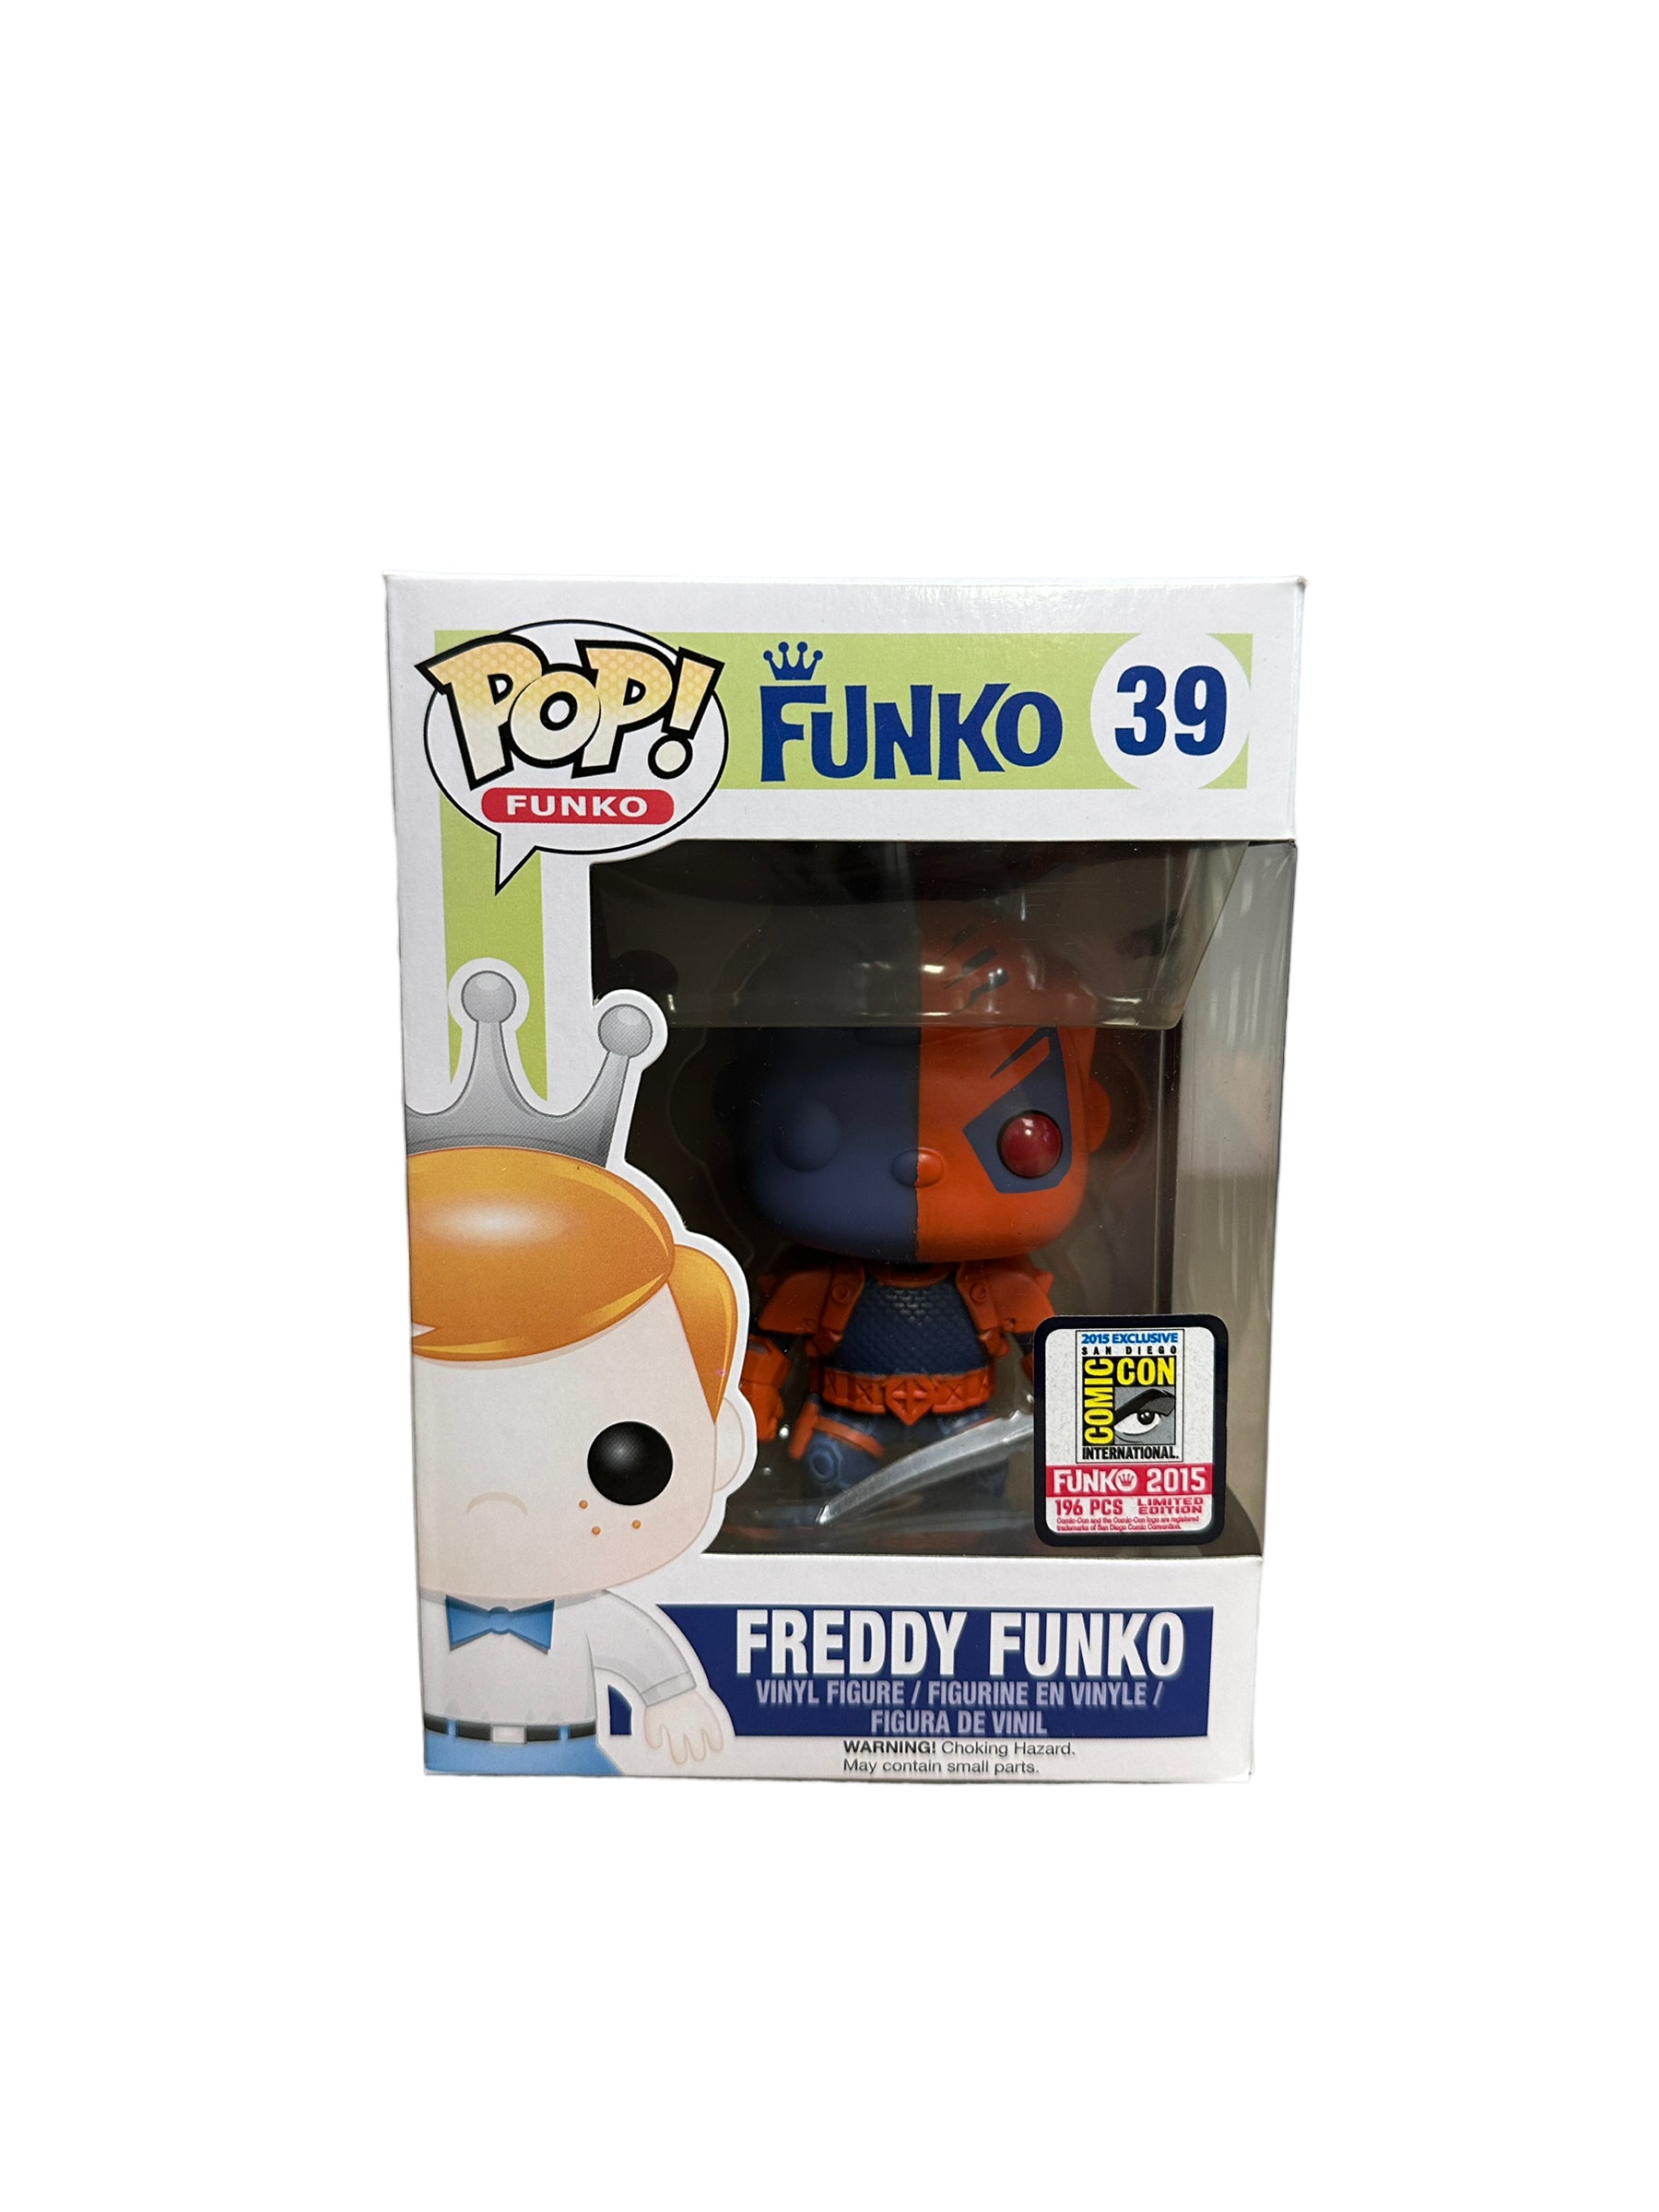 Freddy Funko as Deathstroke #39 Funko Pop! - SDCC 2015 Exclusive LE196 Pcs - Condition 7/10